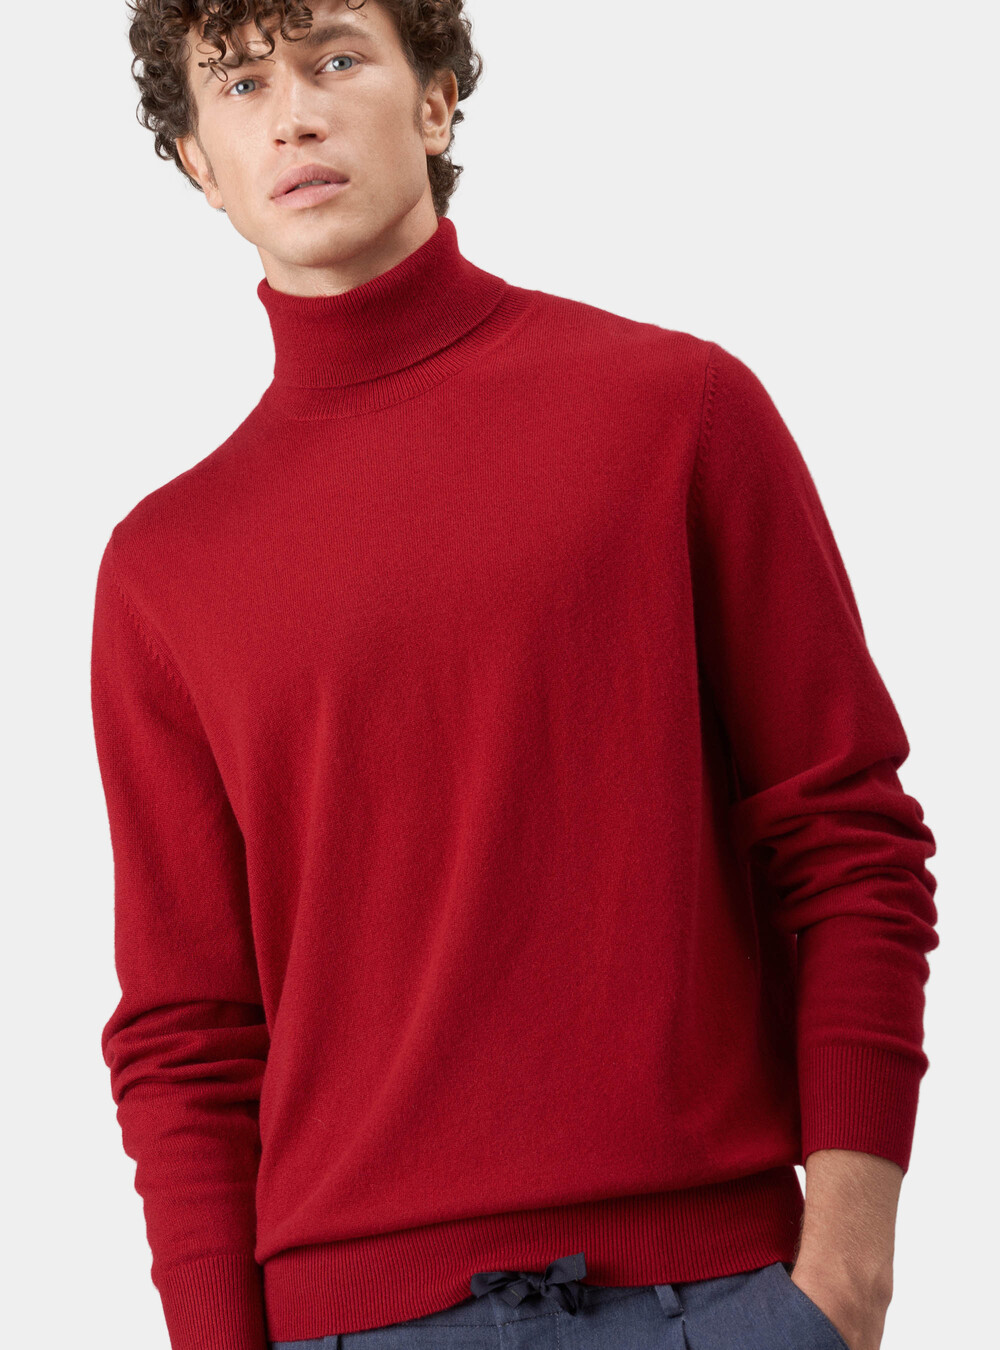 High neck sweater 100% cashmere | GutteridgeUS |  catalog-gutteridge-storefront Uomo